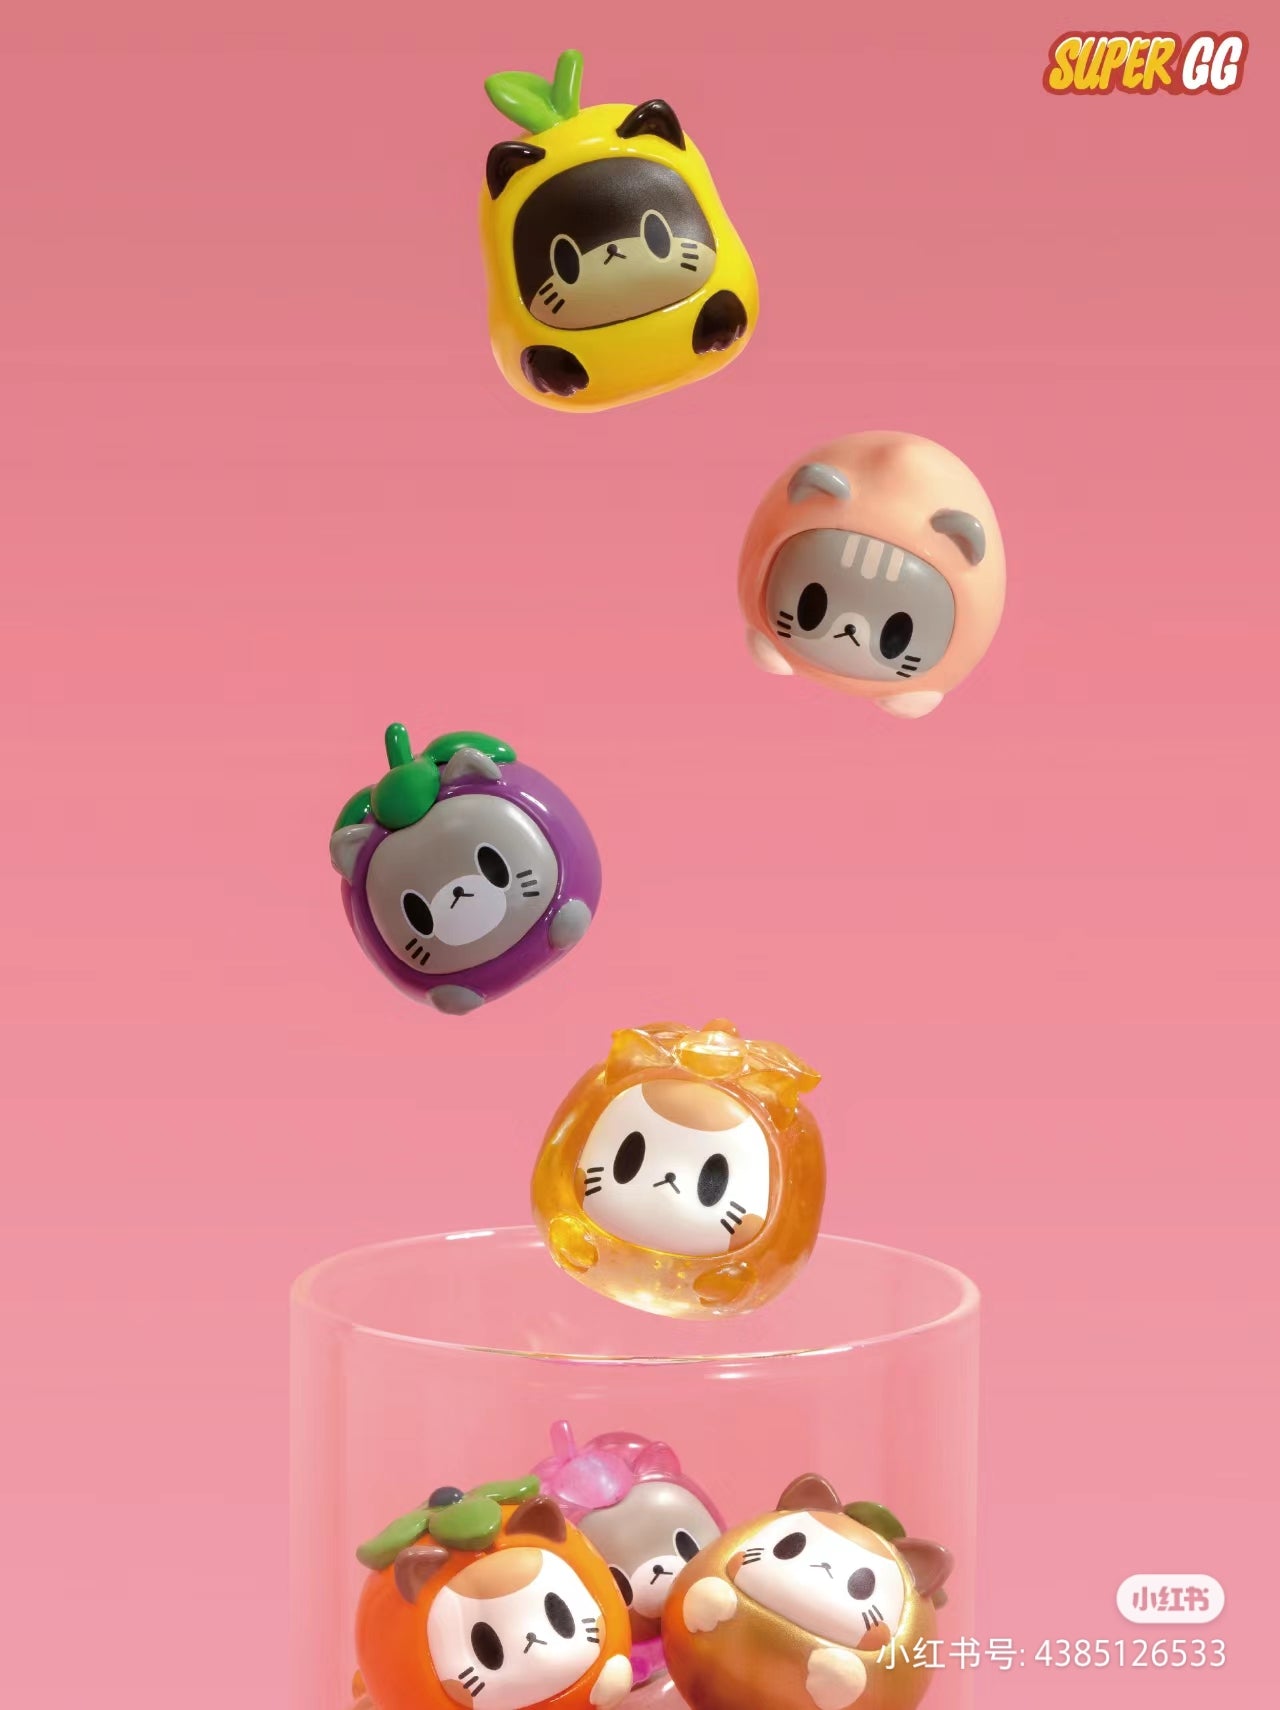 PRE-ORDER : [SuperGG] Fruit Meow - Mini Daruma Series Blind Box